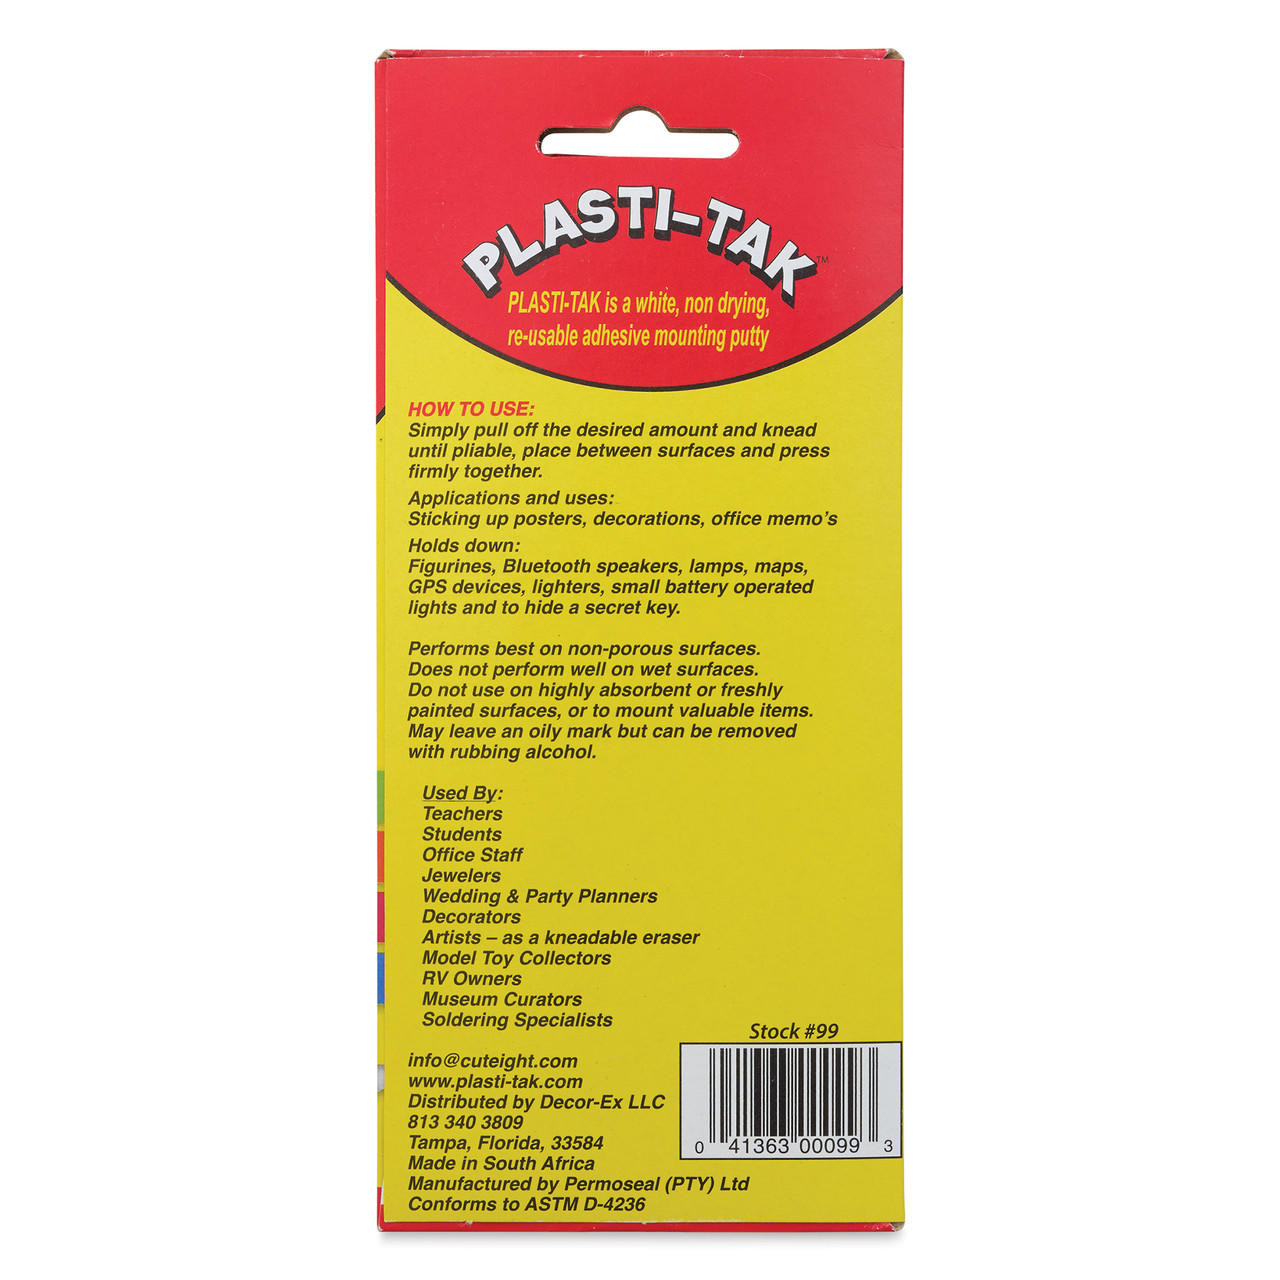 Plasti-Tak Mounting Putty, The Original Re-Usable Adhesive, Non